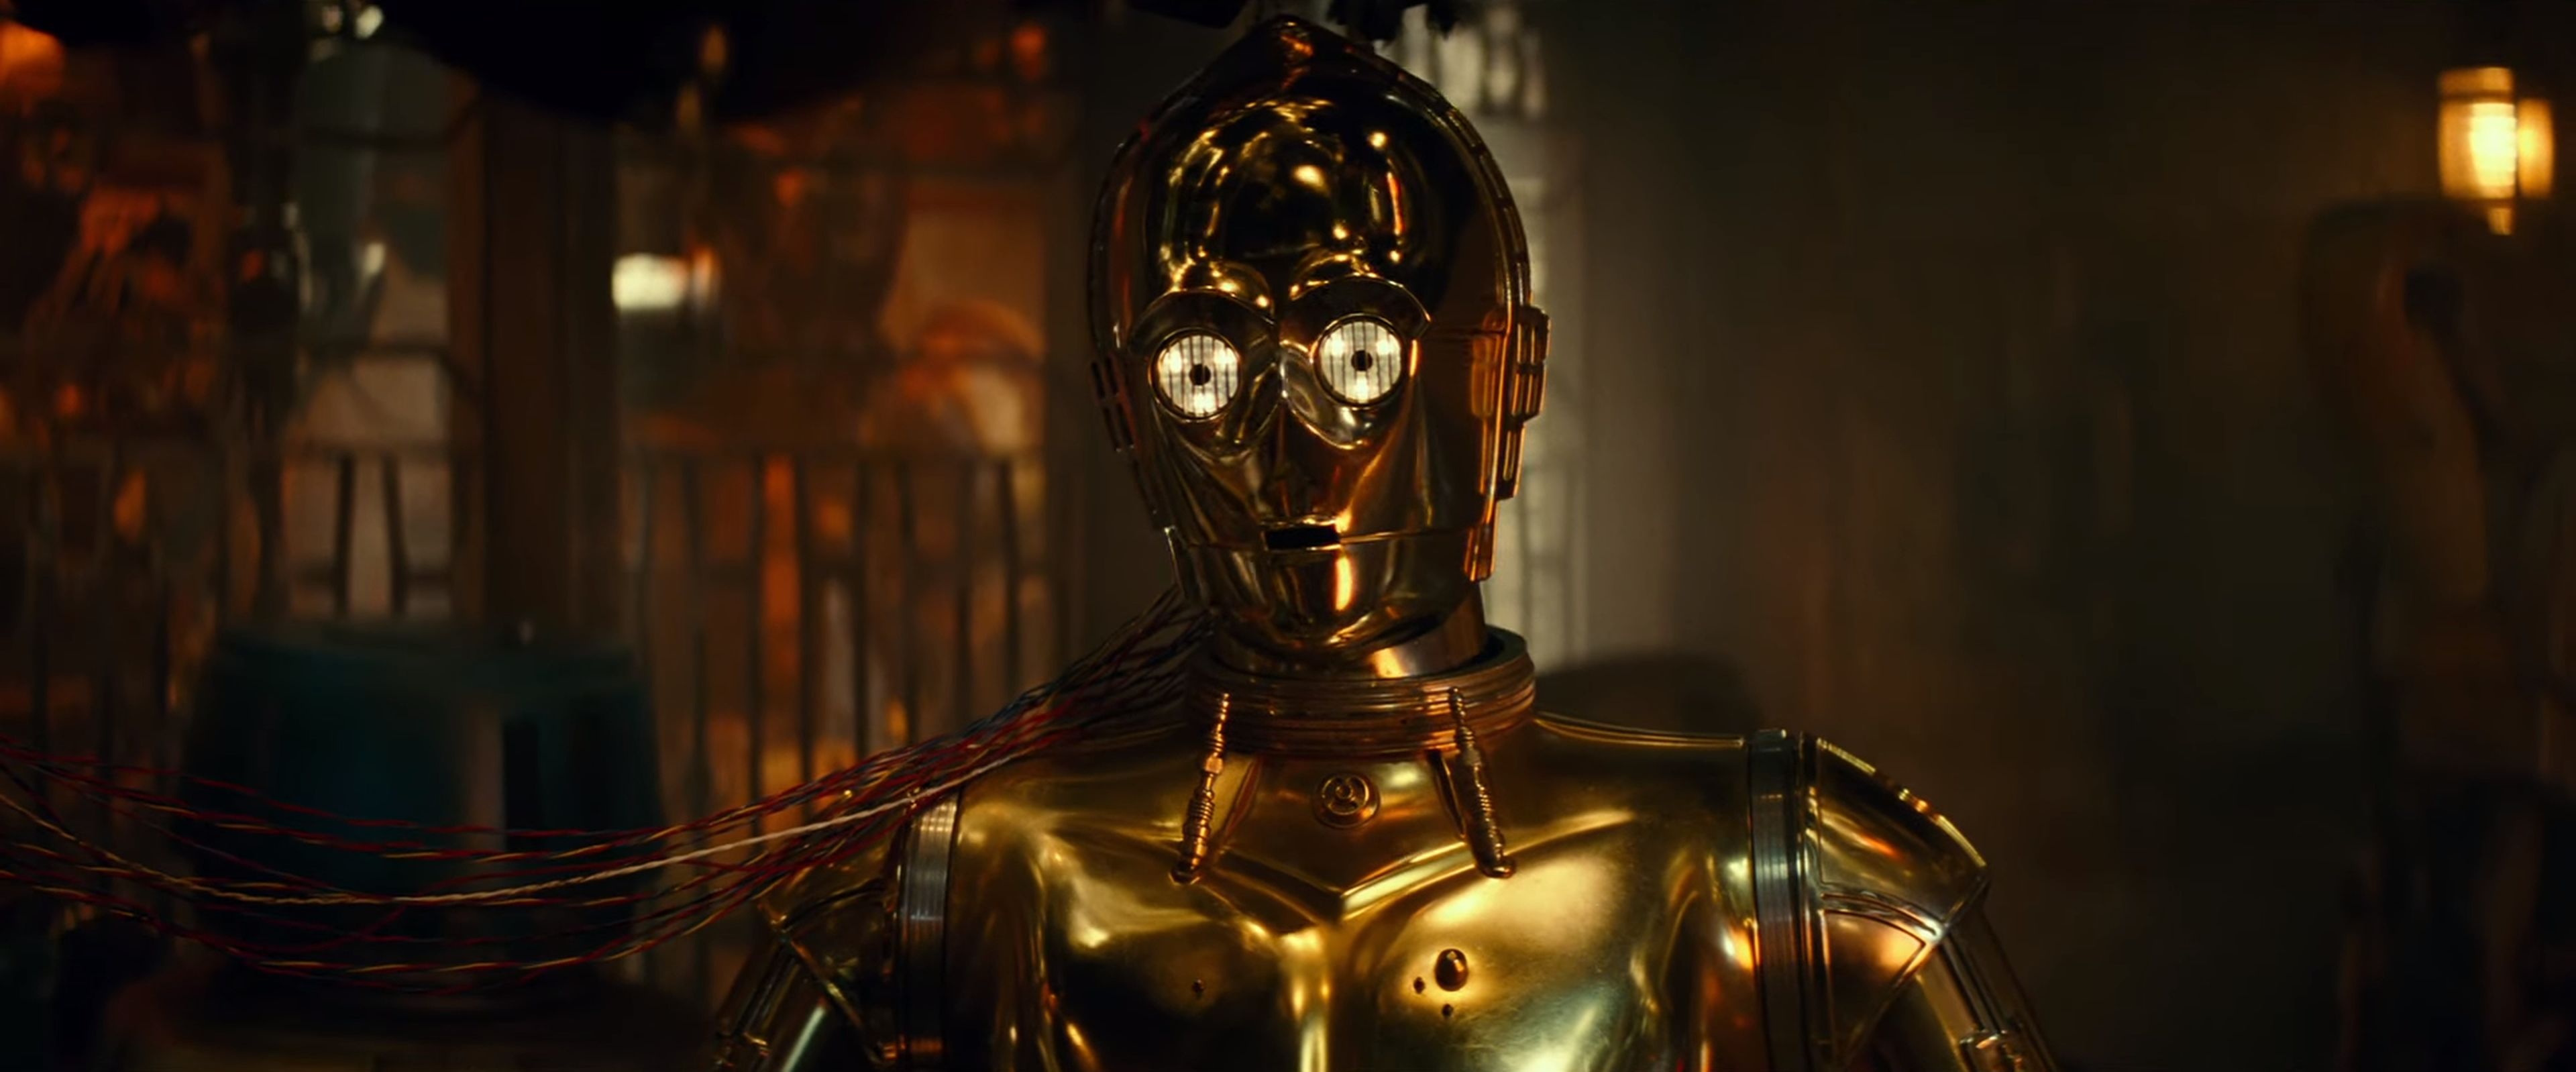 Star Wars episodio IX: El ascenso de Skywalker - C-3PO